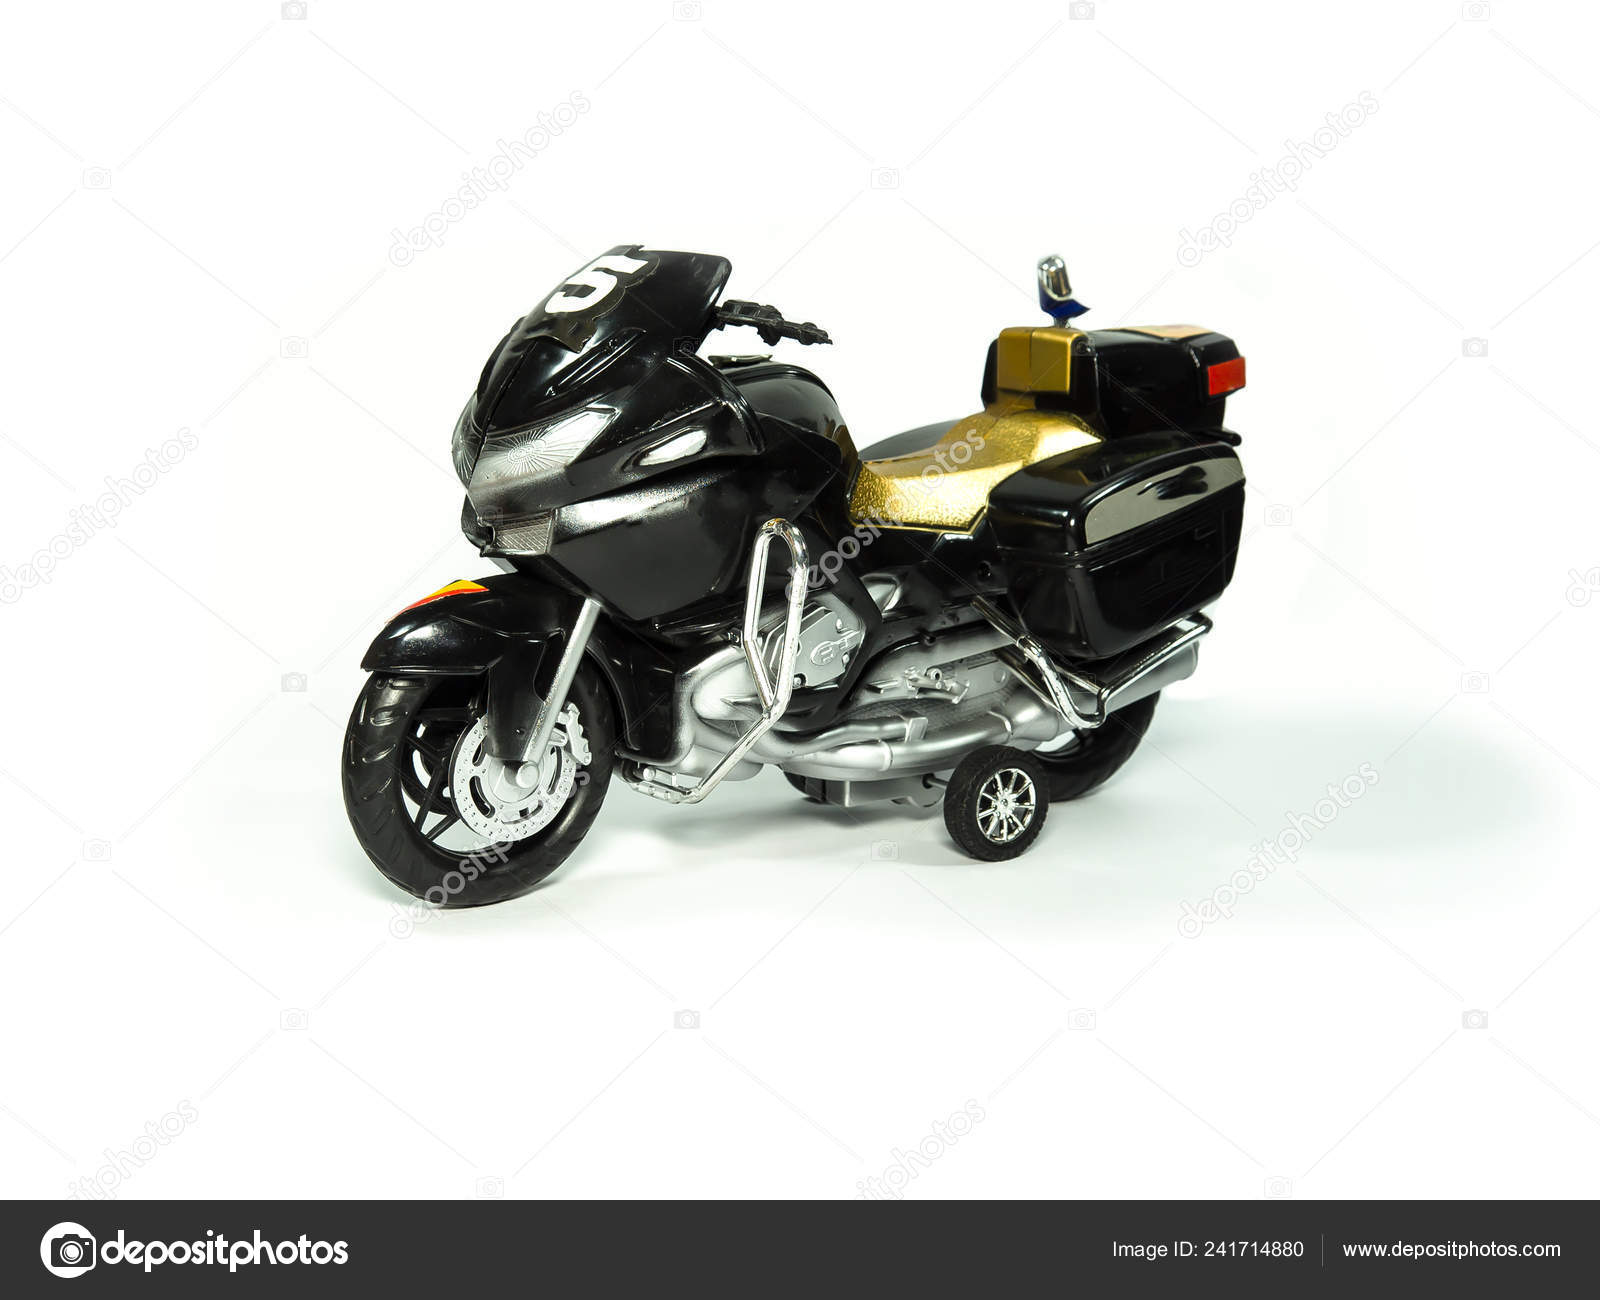 children's toy motorcycle